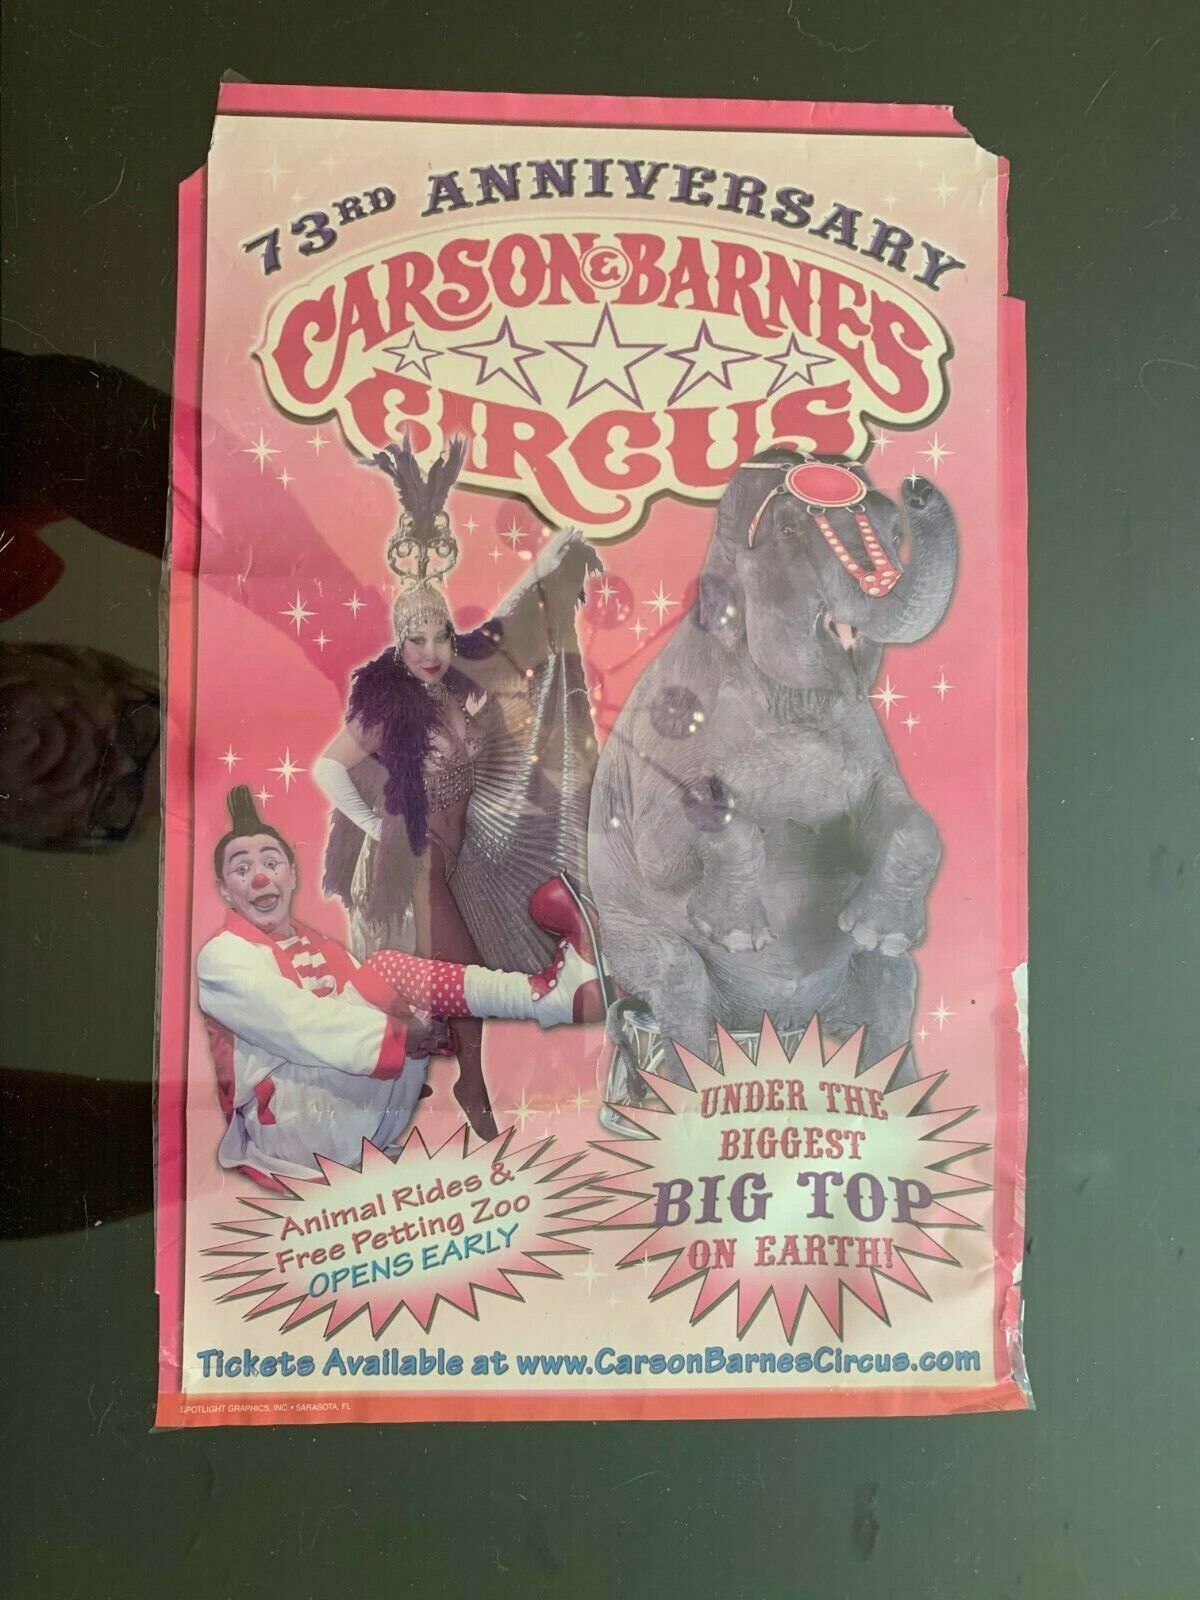 Vintage Carson Barnes Circus Poster 73rd Anniversary